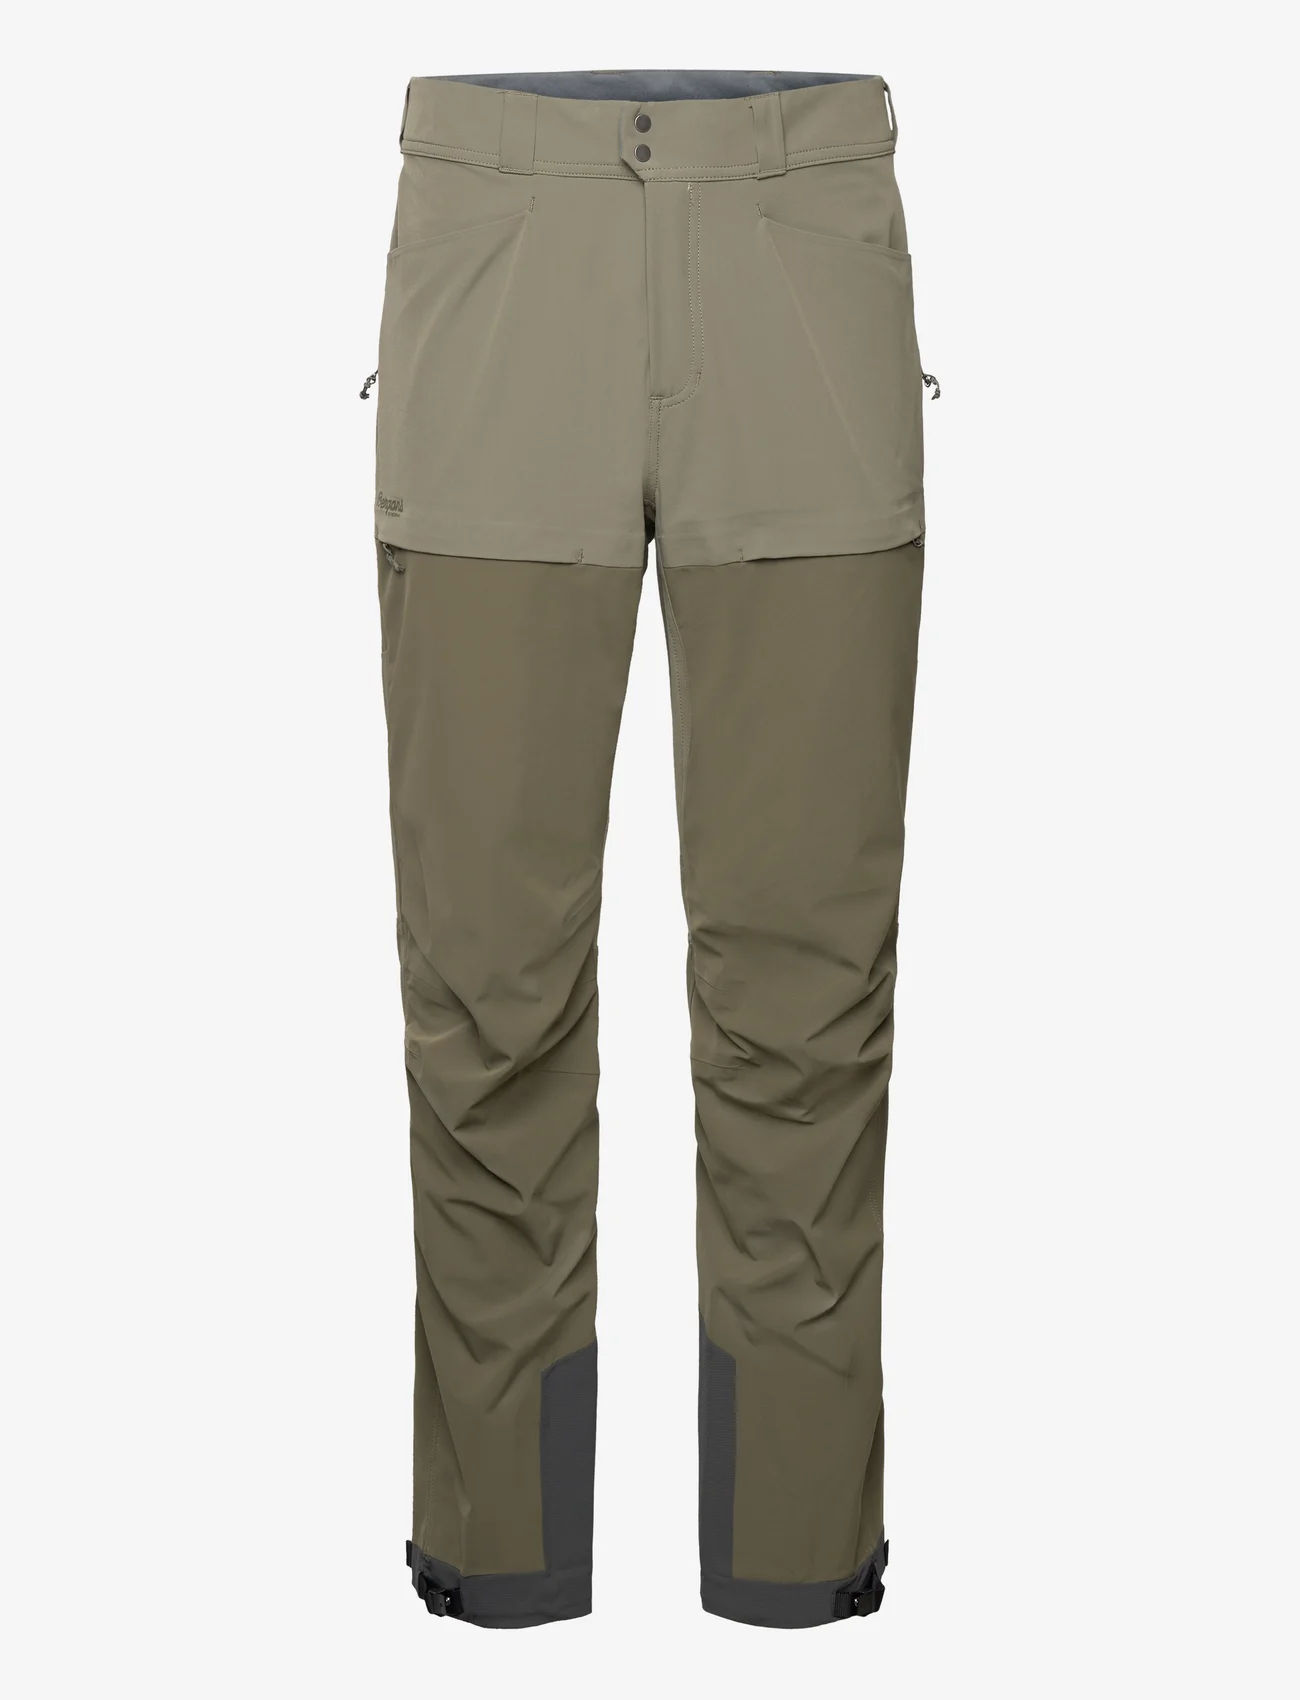 Bergans - Bekkely Hybrid Pants - friluftsbukser - dark green mud / green mud - 0